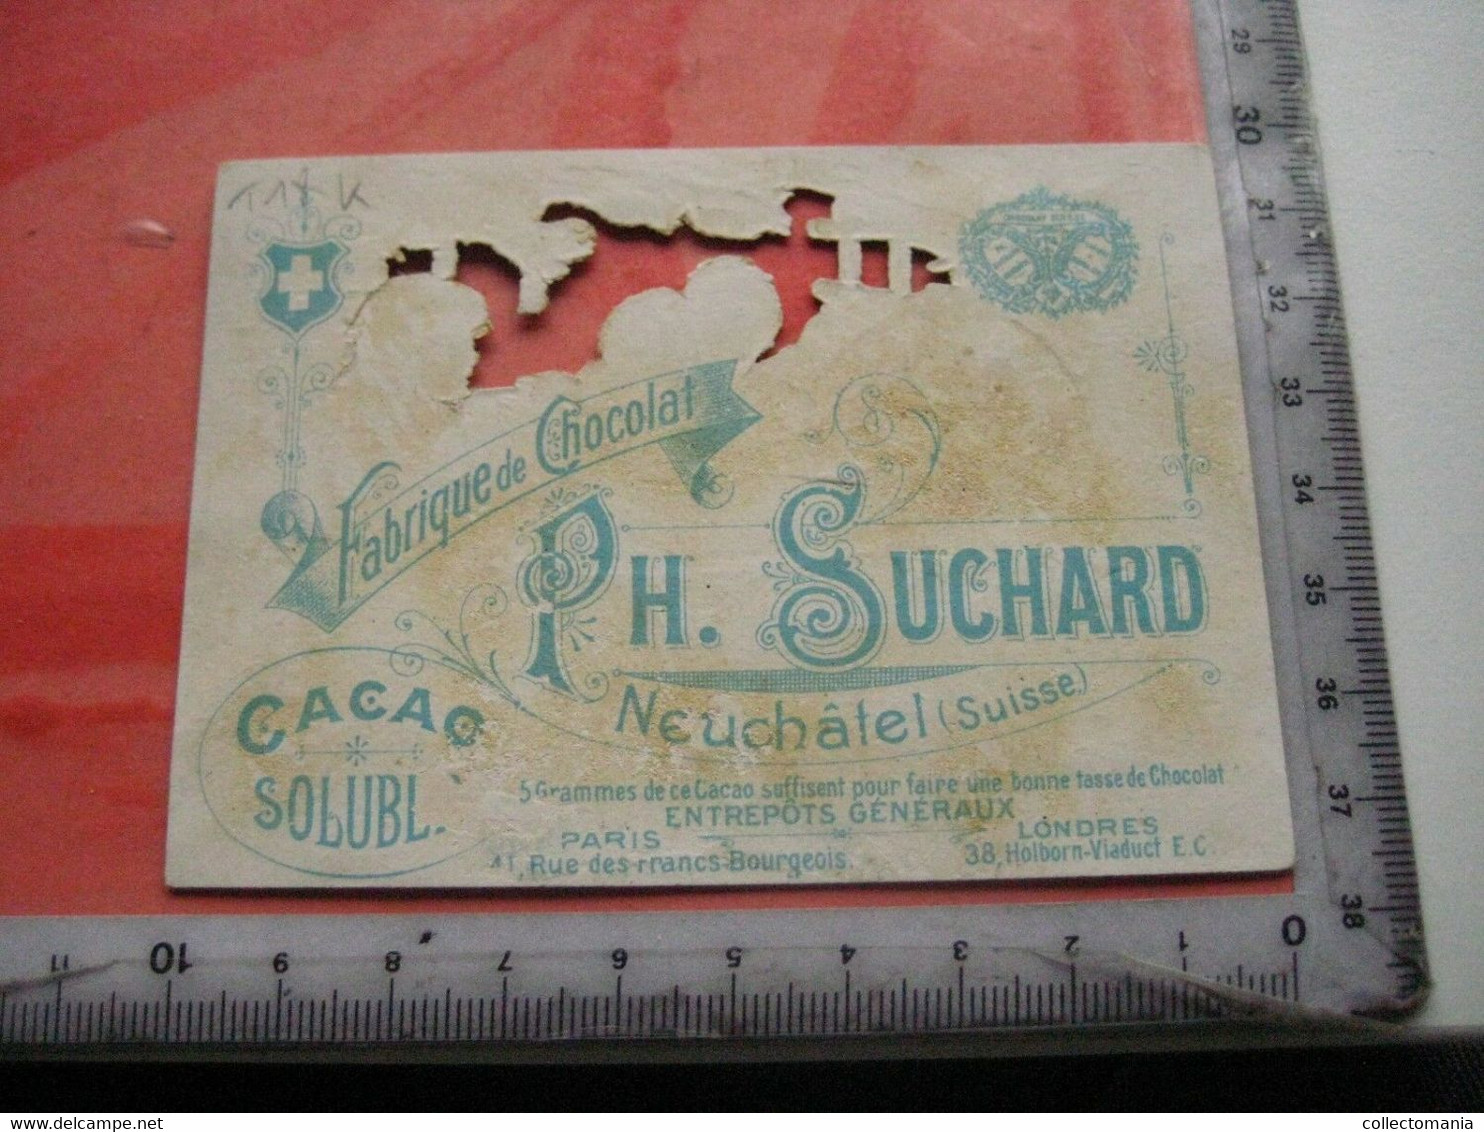 1 Litho Chromo Die Cut Advertising Card C1891 Chocolate SUCHARD V17i - 4 Girls At Small Table - Uitgekapte Kaart - Suchard